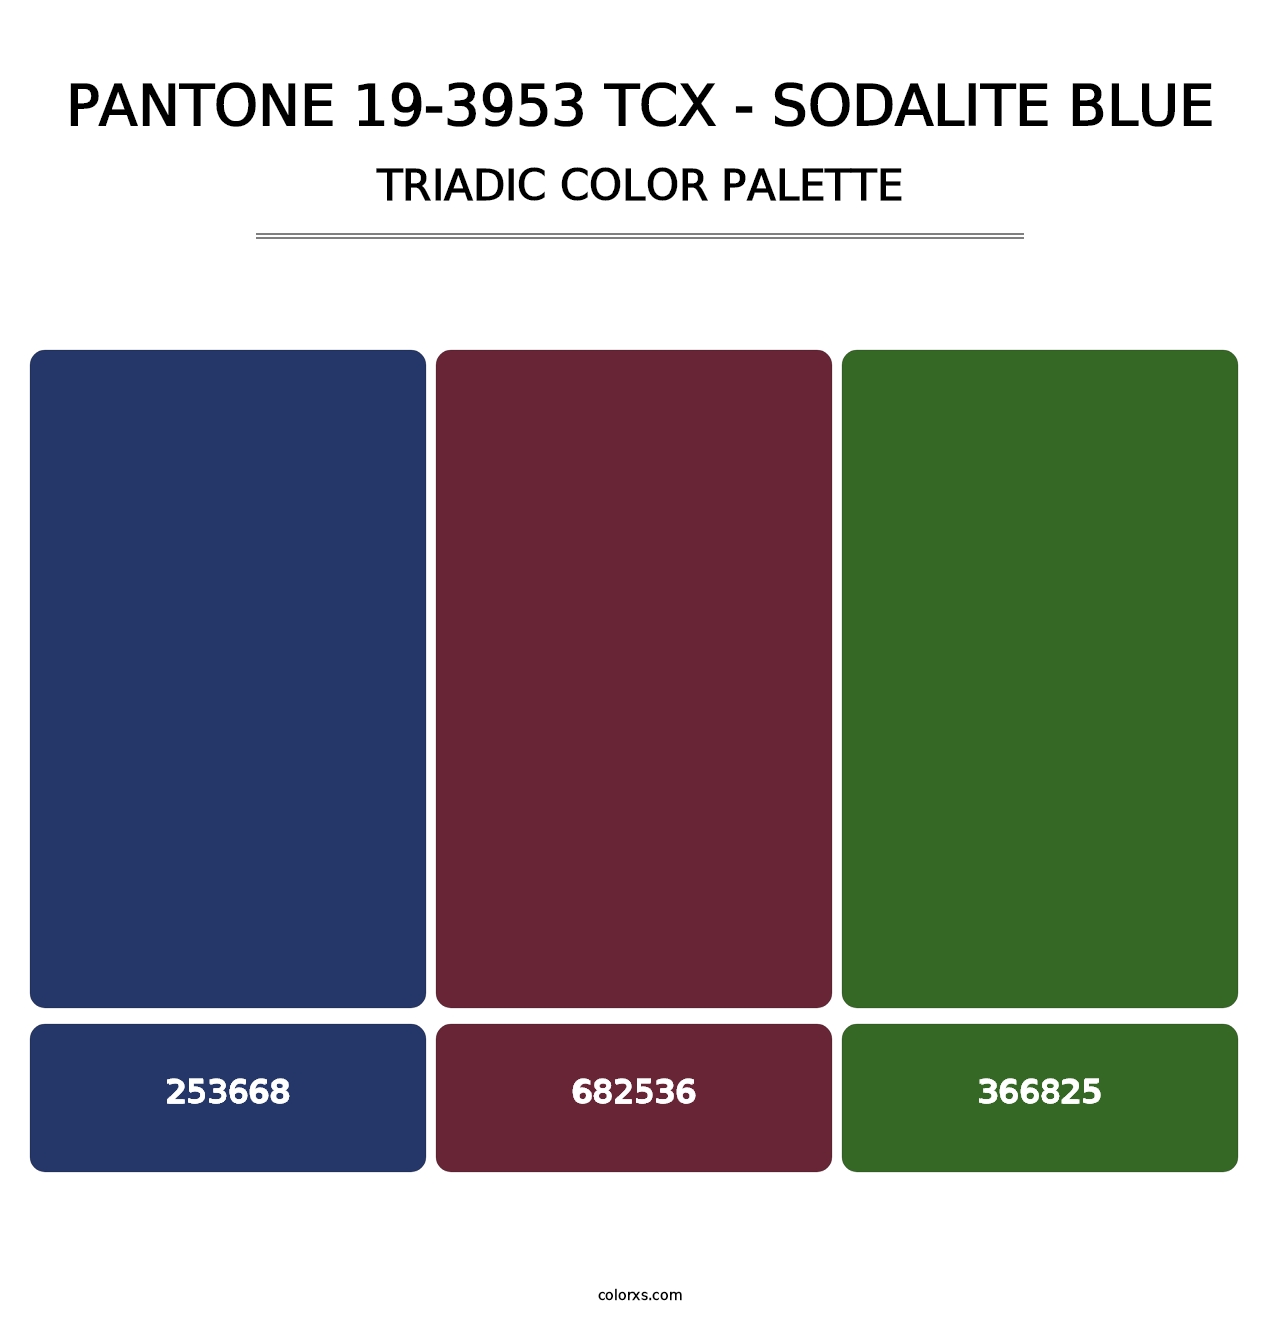 PANTONE 19-3953 TCX - Sodalite Blue - Triadic Color Palette